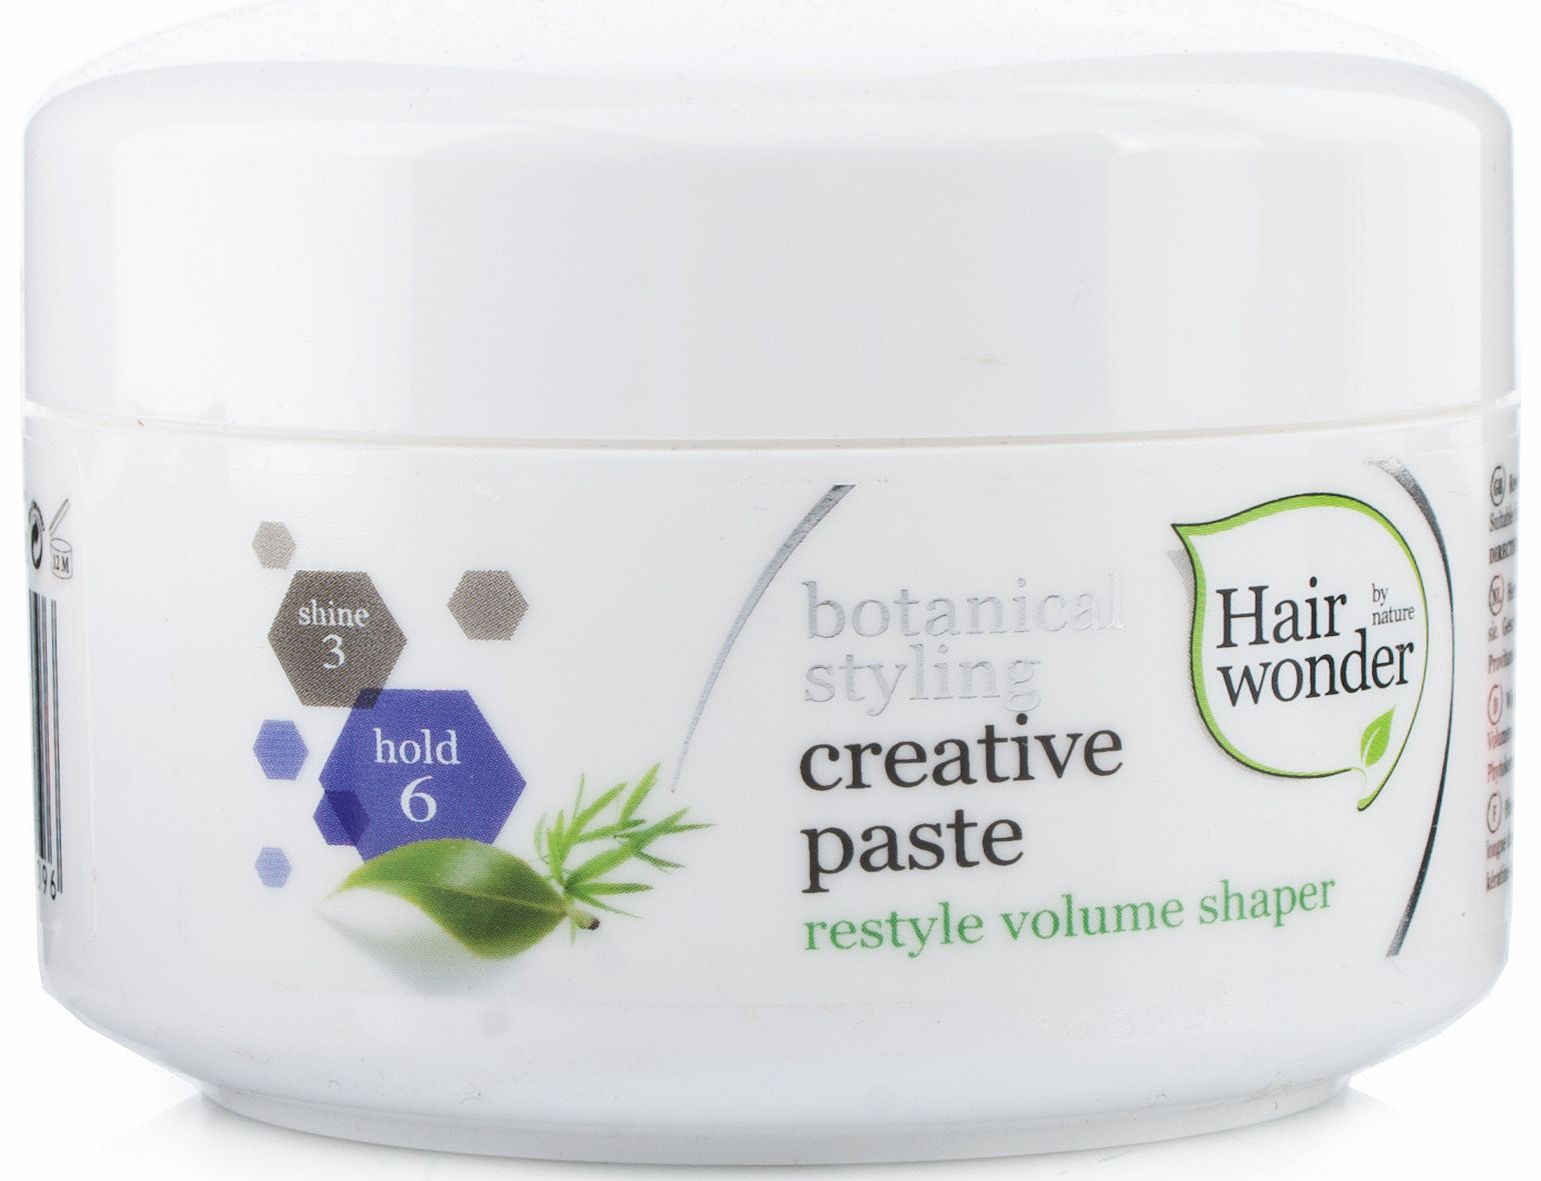 Unbranded Hair Wonder Botanical Styling Creative Paste